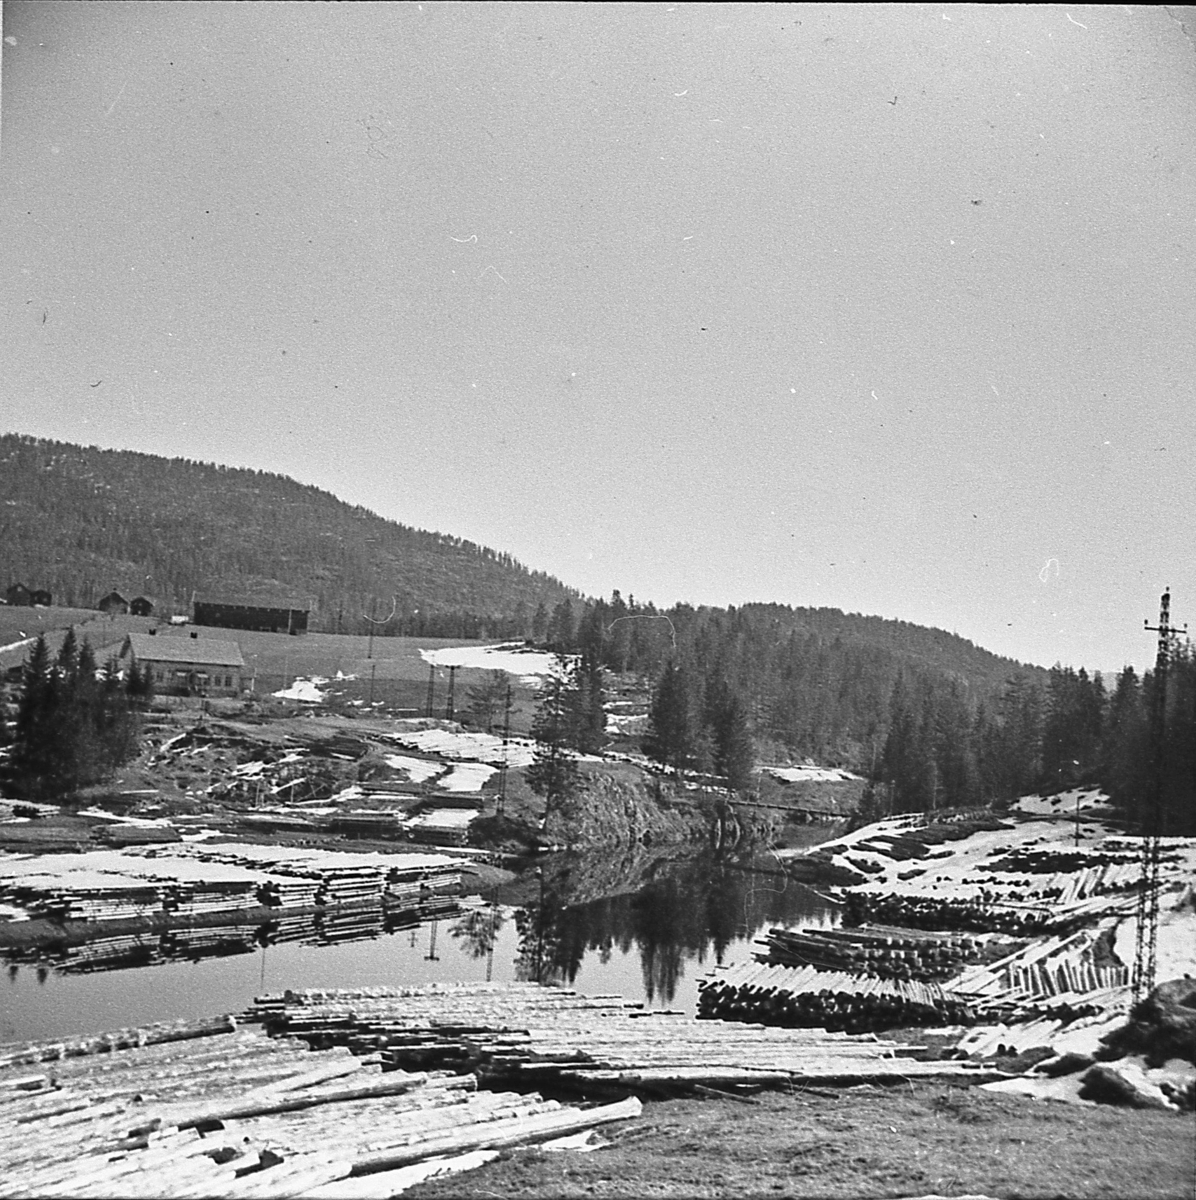 Tømmervelter ved Simoa, ved Eikje - Vad. Tømmeret ligger til tørk, ferdig til utslag. Ca. 1947.